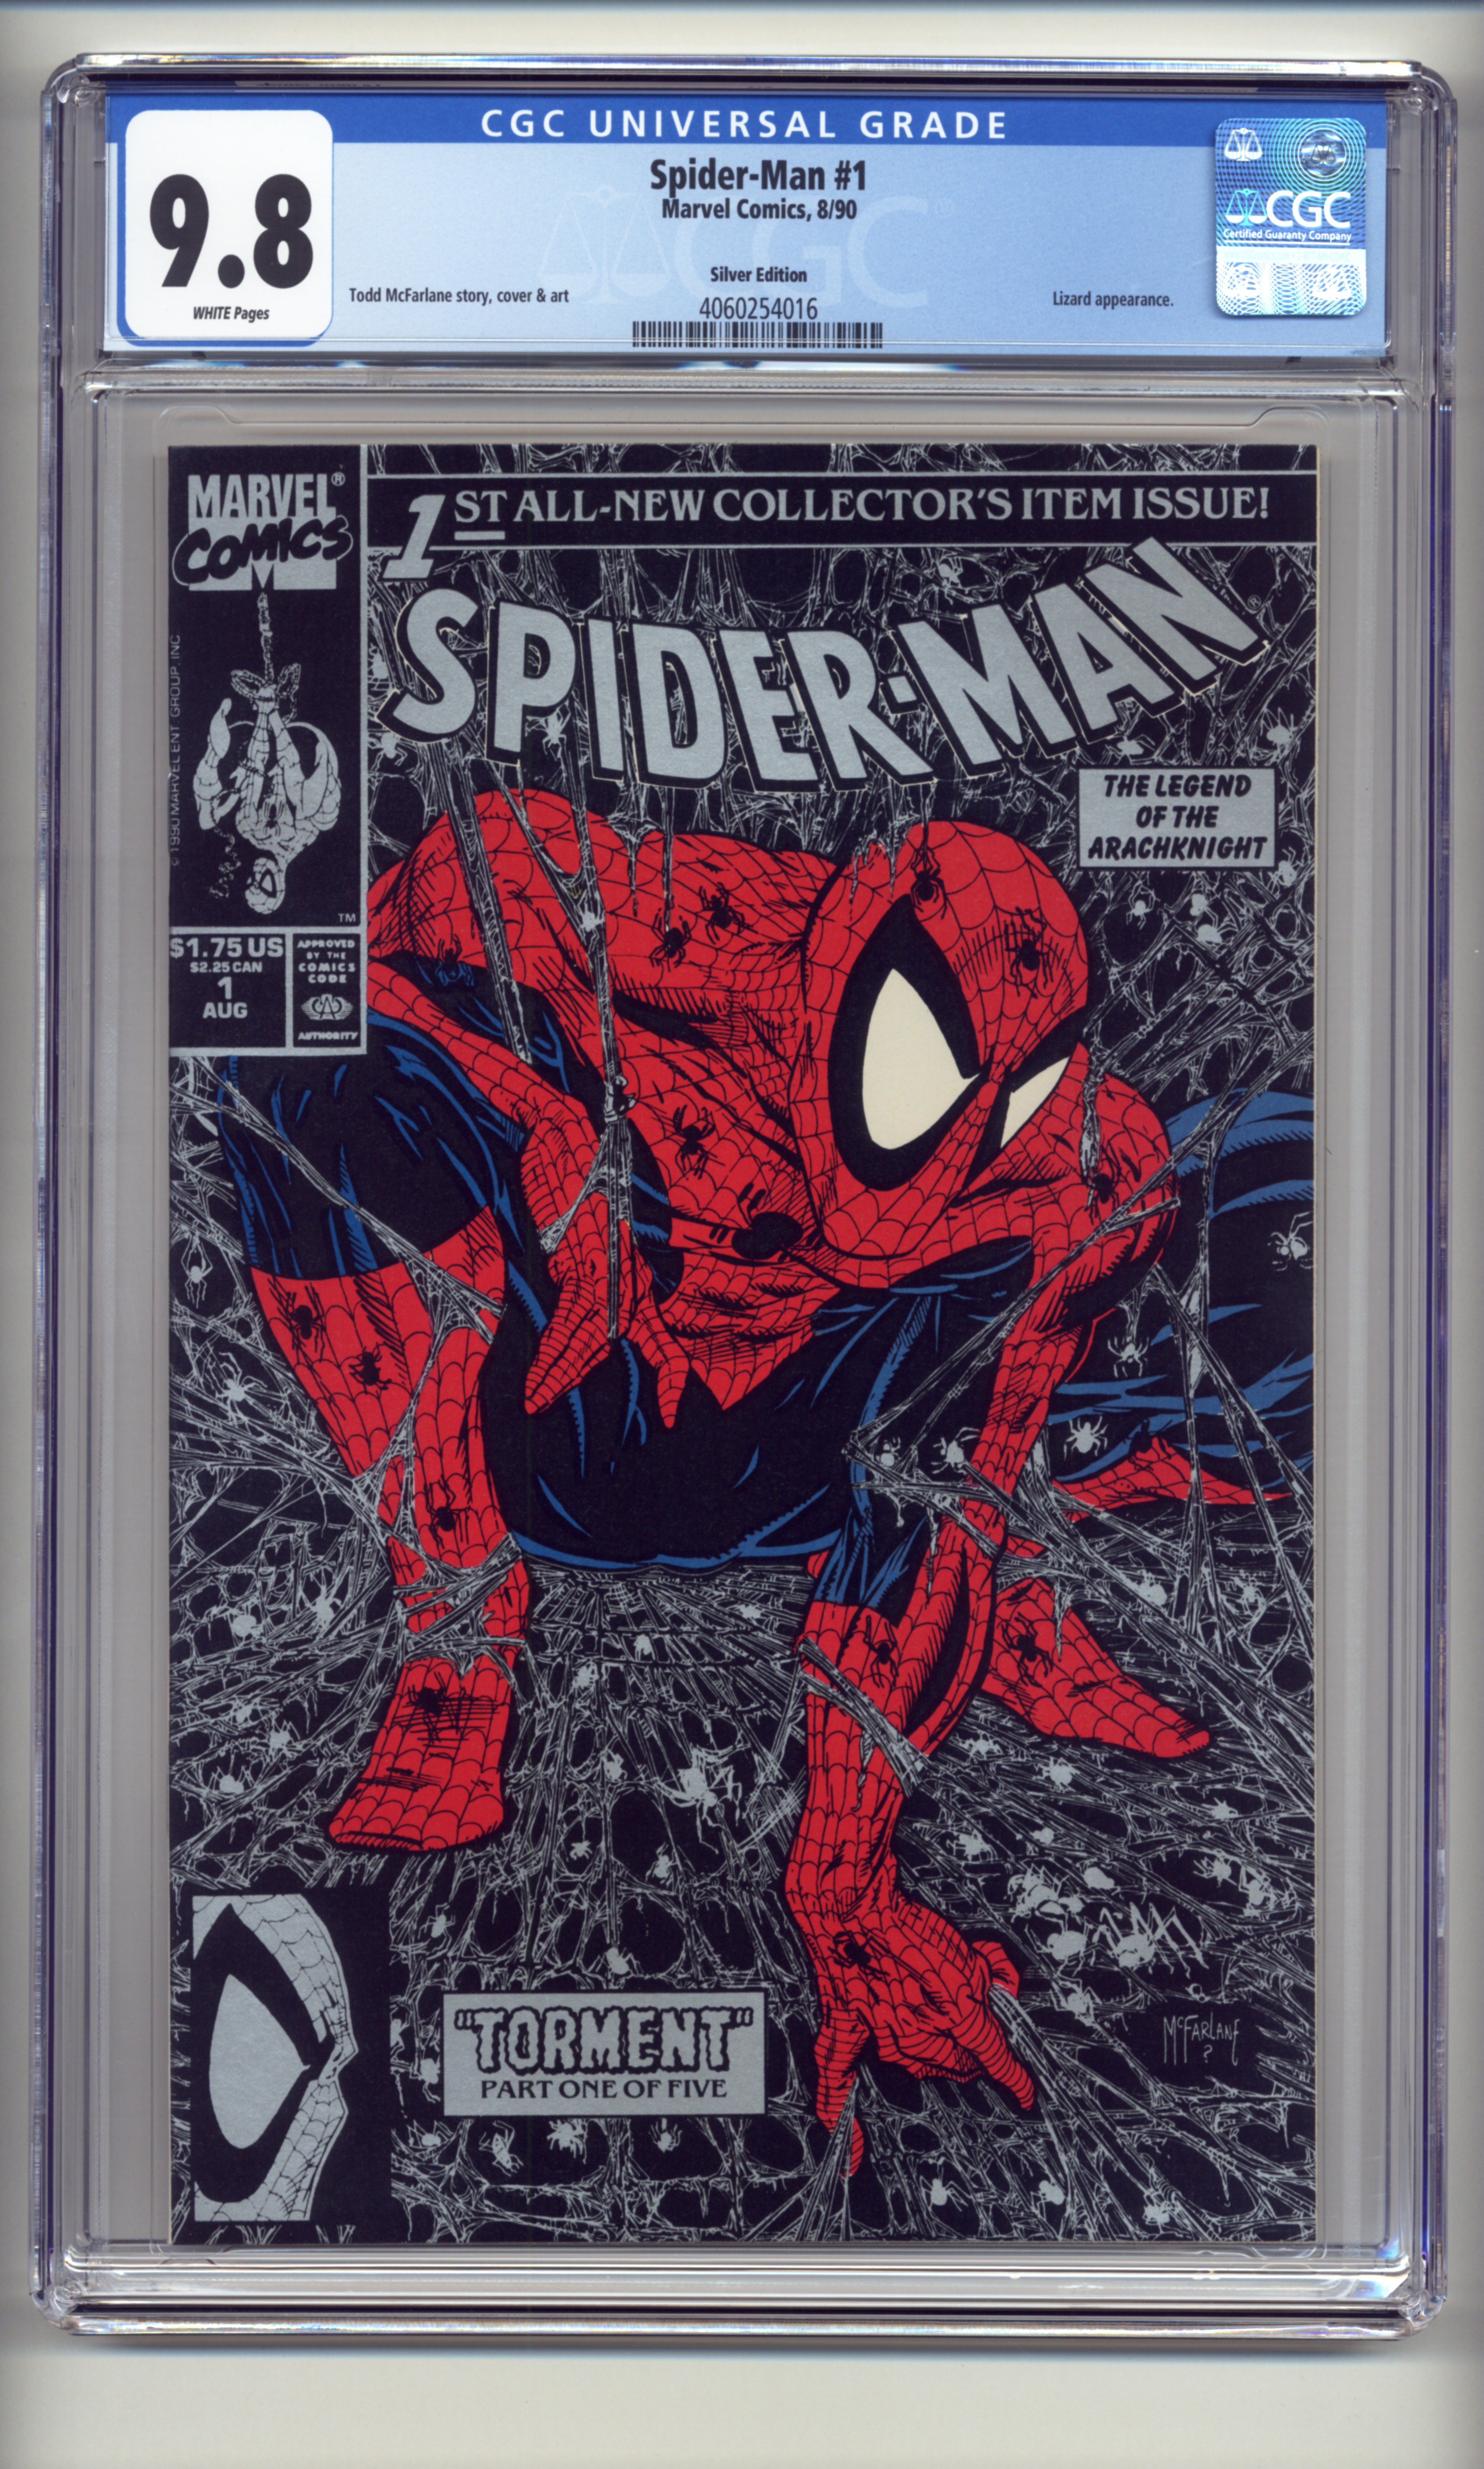 Spider-Man-1-Silver-4060254016-fc.jpg